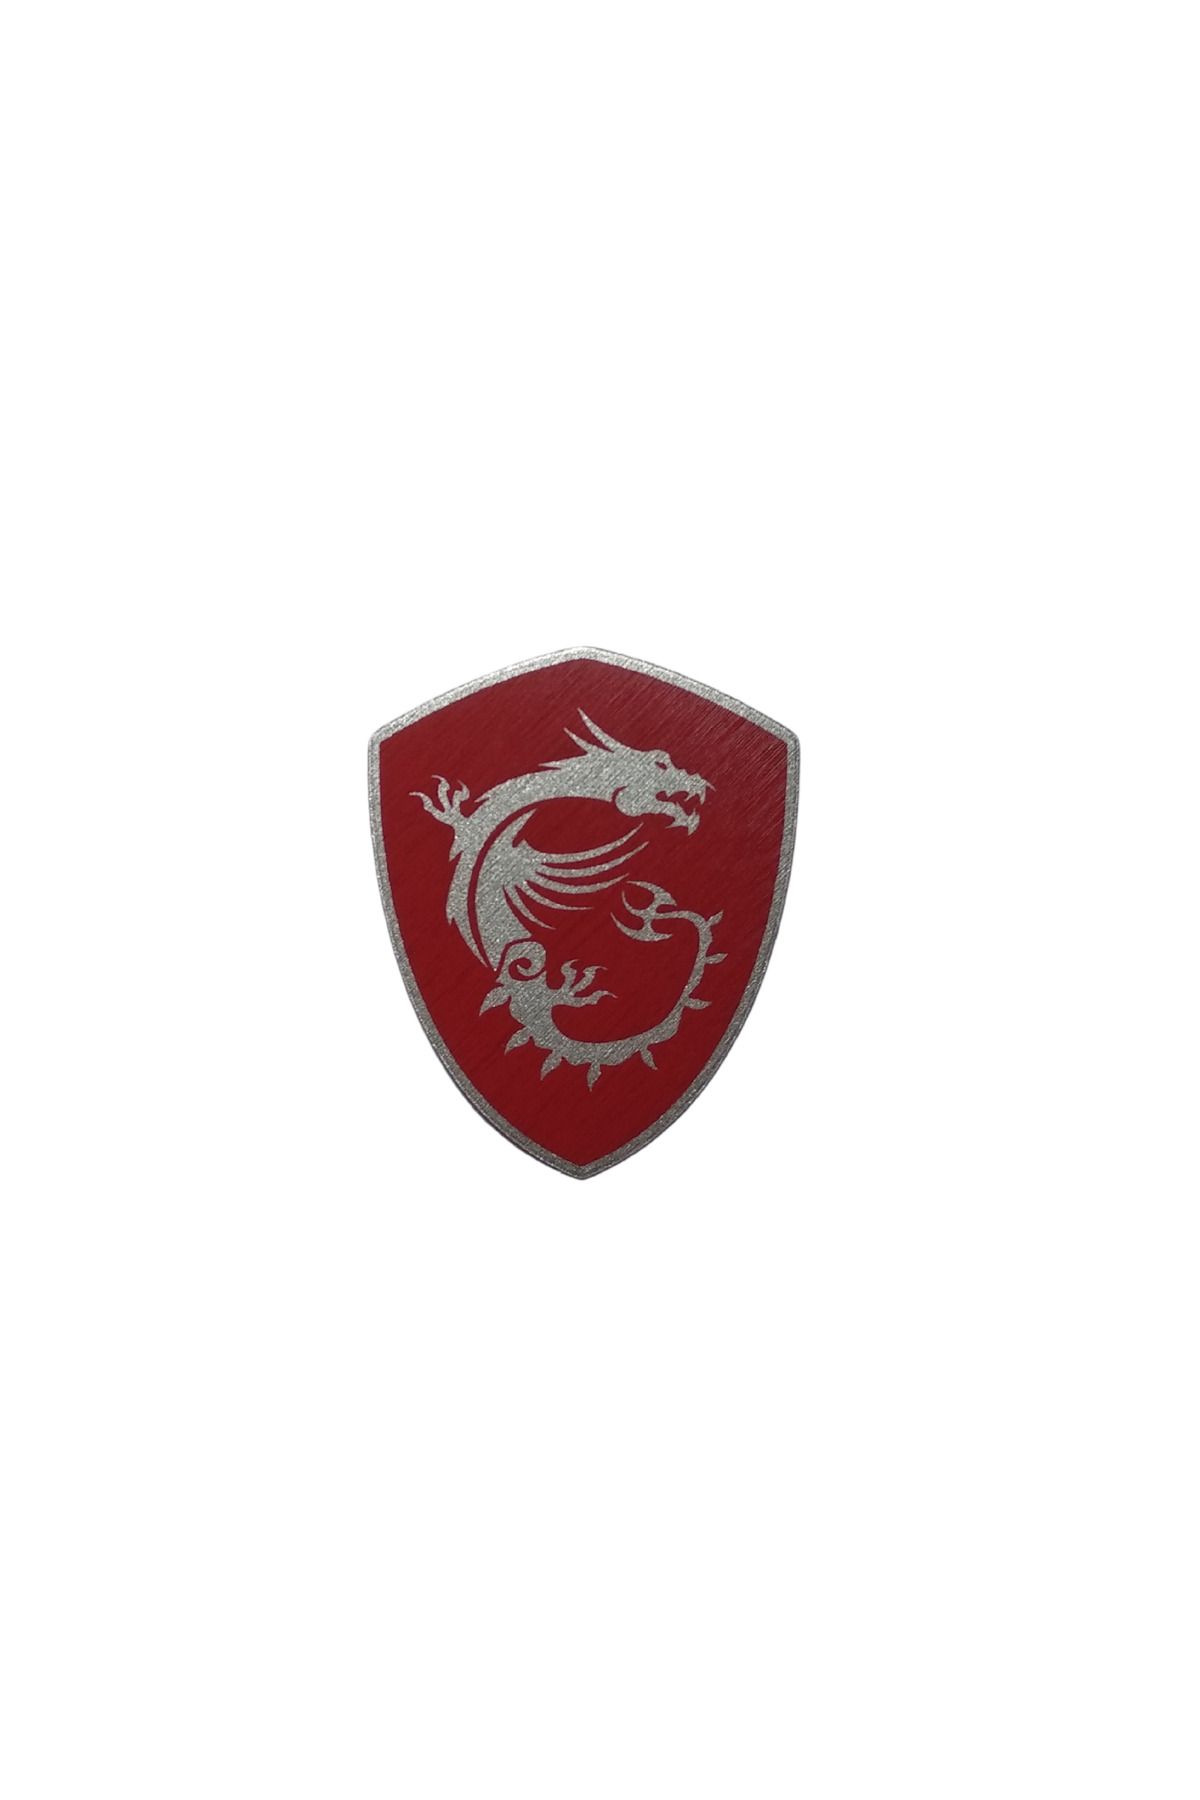 MSI Gaming Dragon Shield PC Kasa Etiket Rozeti E29-7B16012-H48 Kırmızı